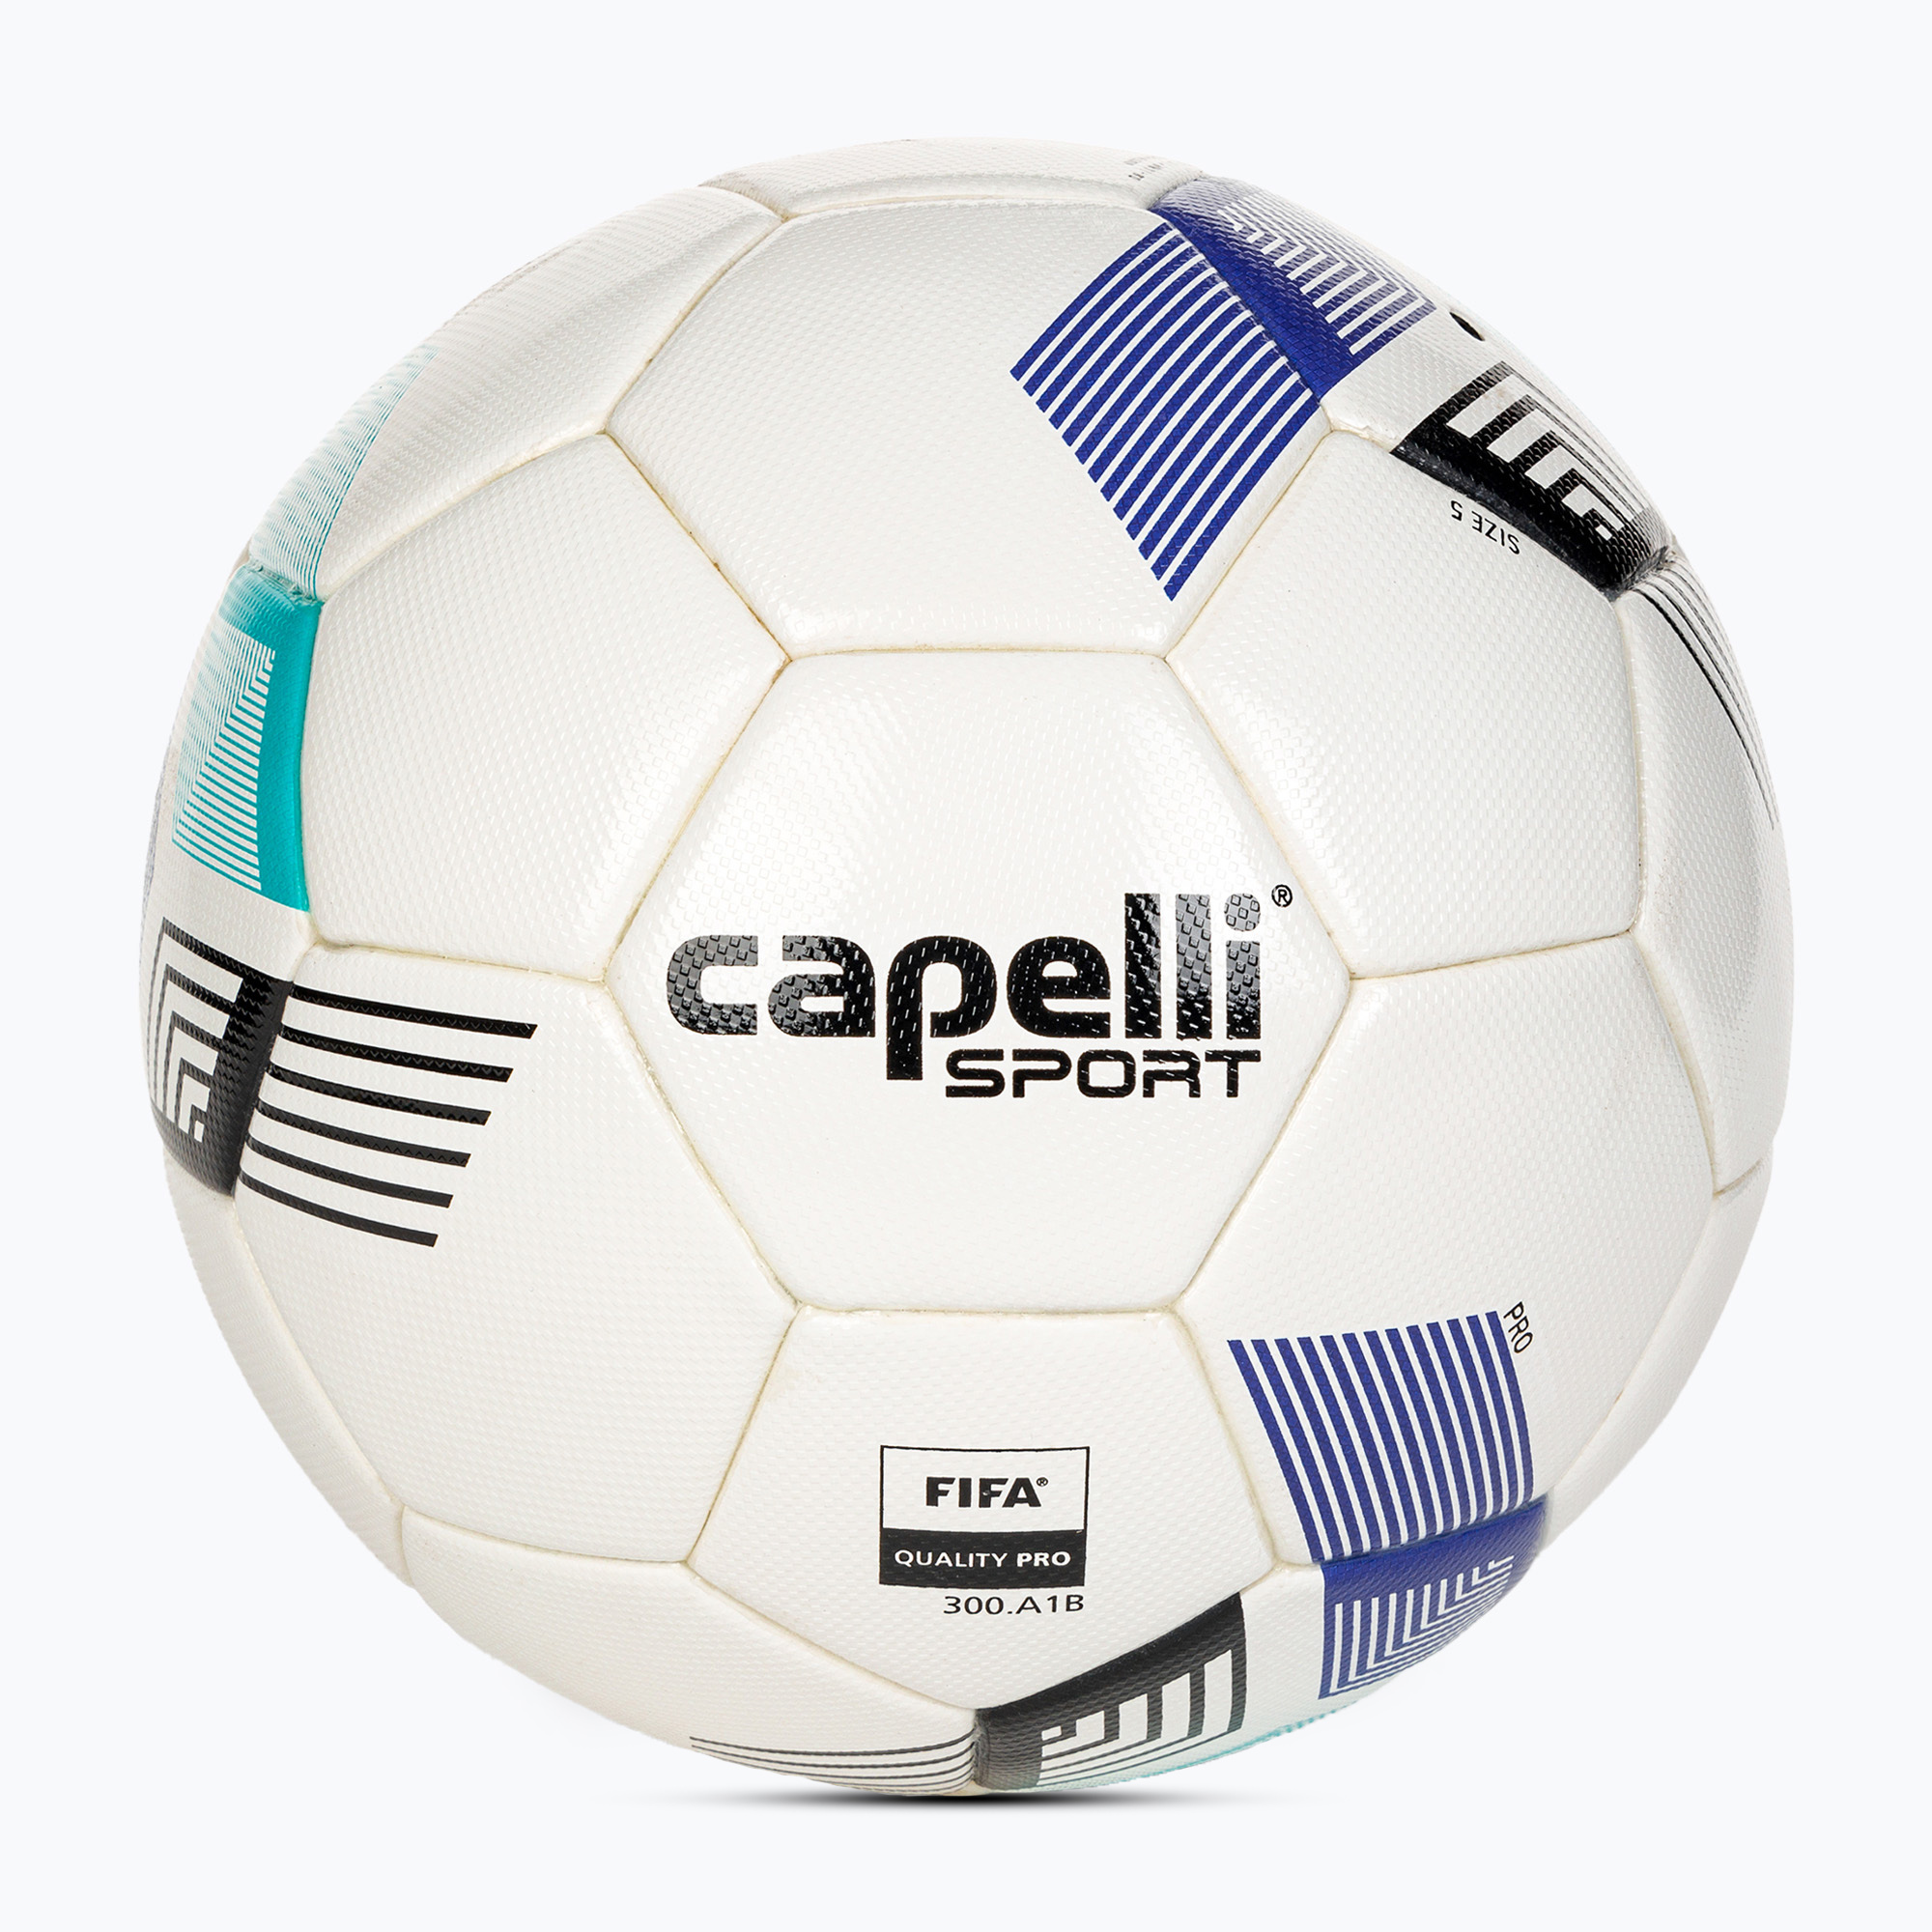 Capelli Tribeca Metro Pro Fifa Качество Футбол AGE-5420 размер 5